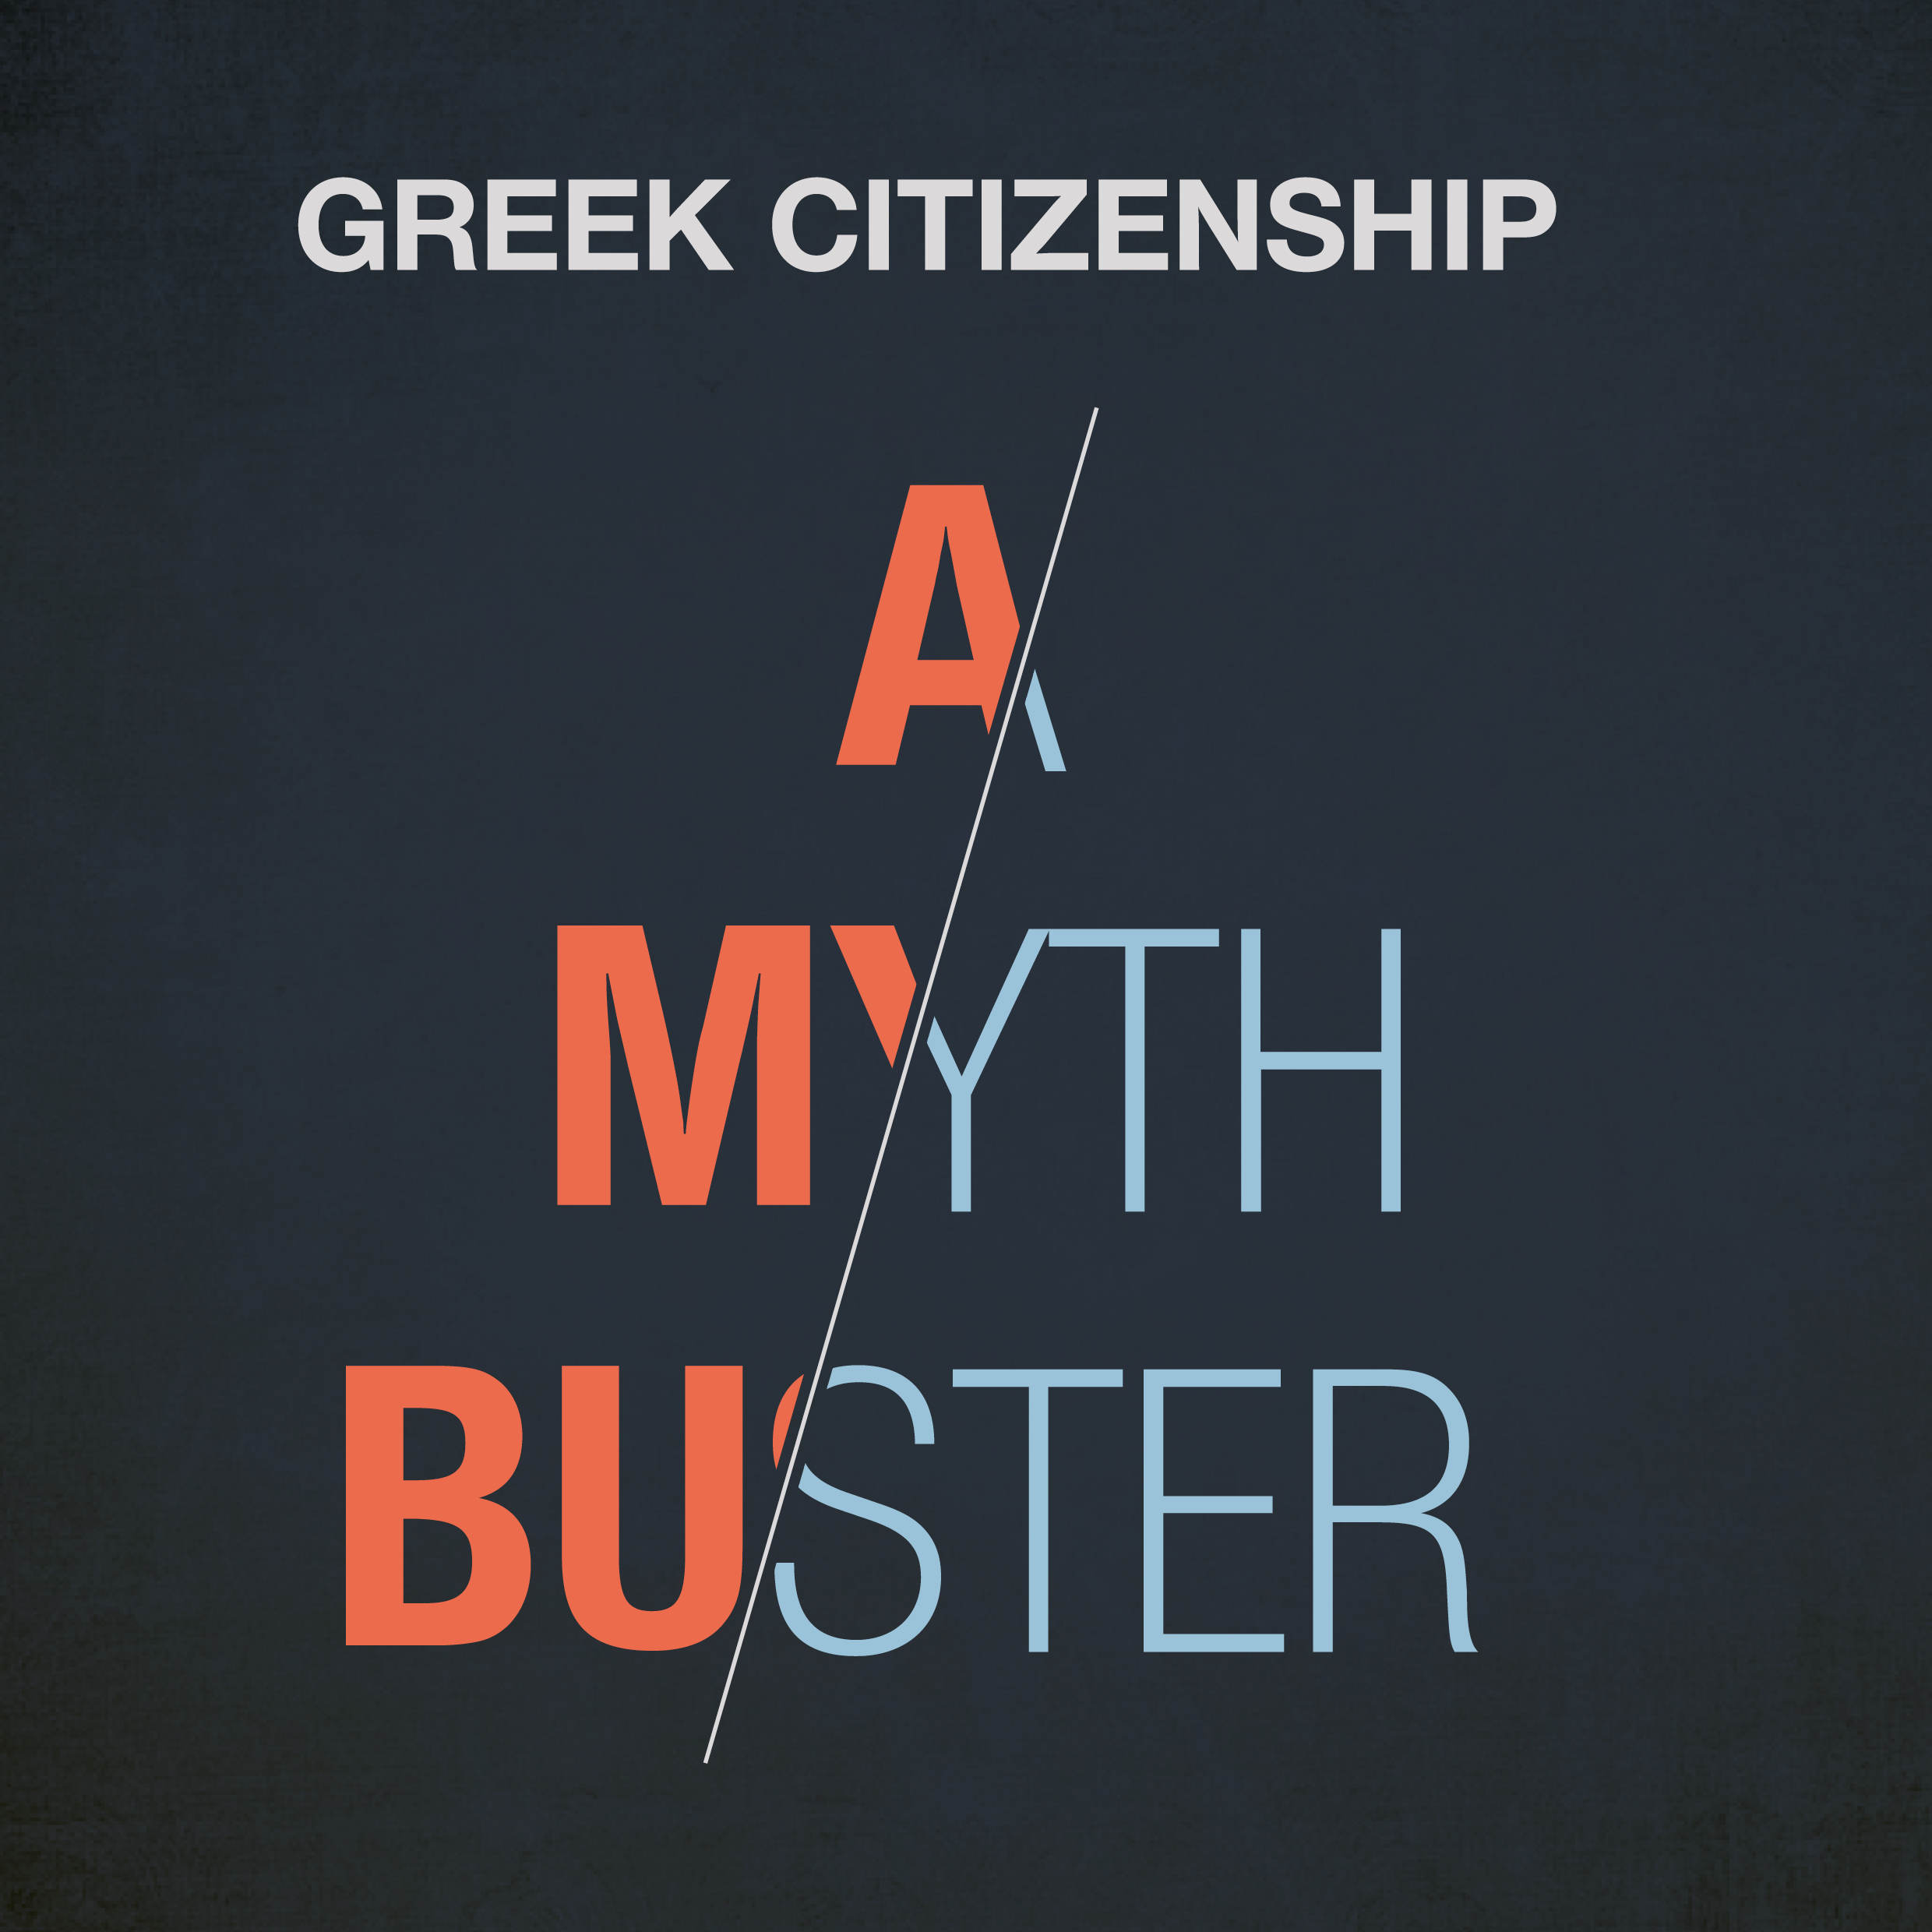 Greek Citizenship – A Mythbuster